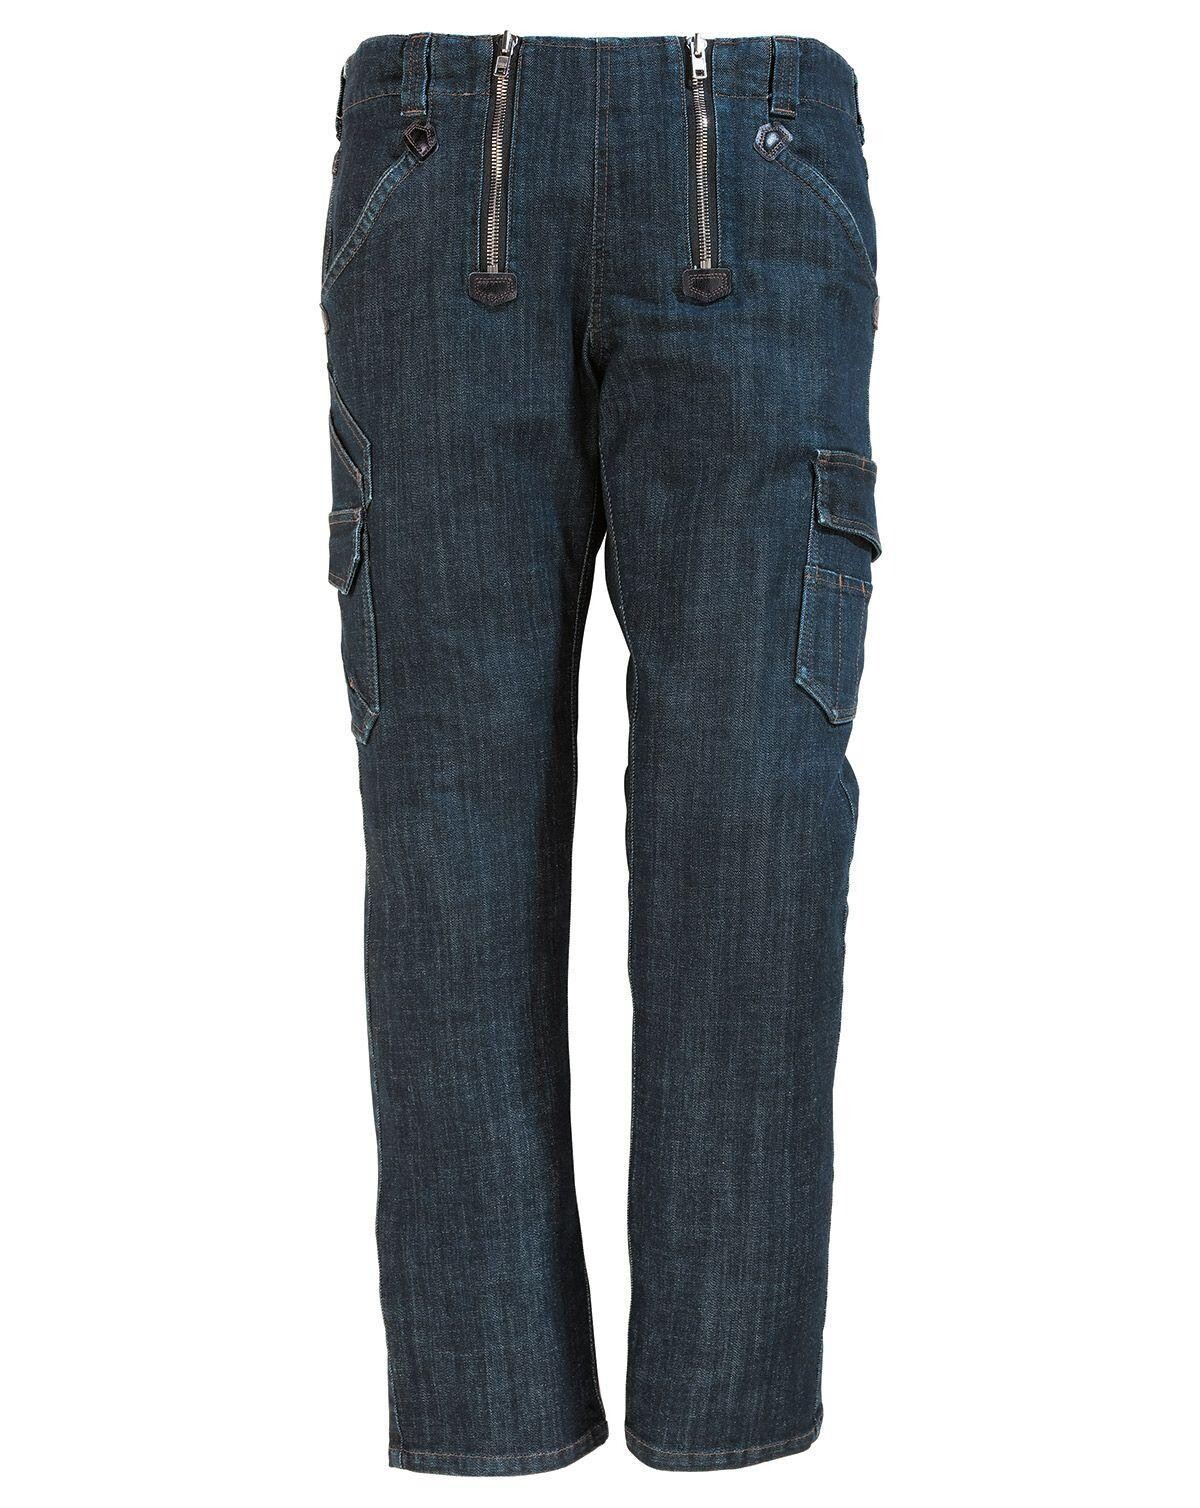 #2 - FHB Naver Bukser i Stretch Jeans - FRIEDHELM (Blå / Sort, W31/L34 - 88)